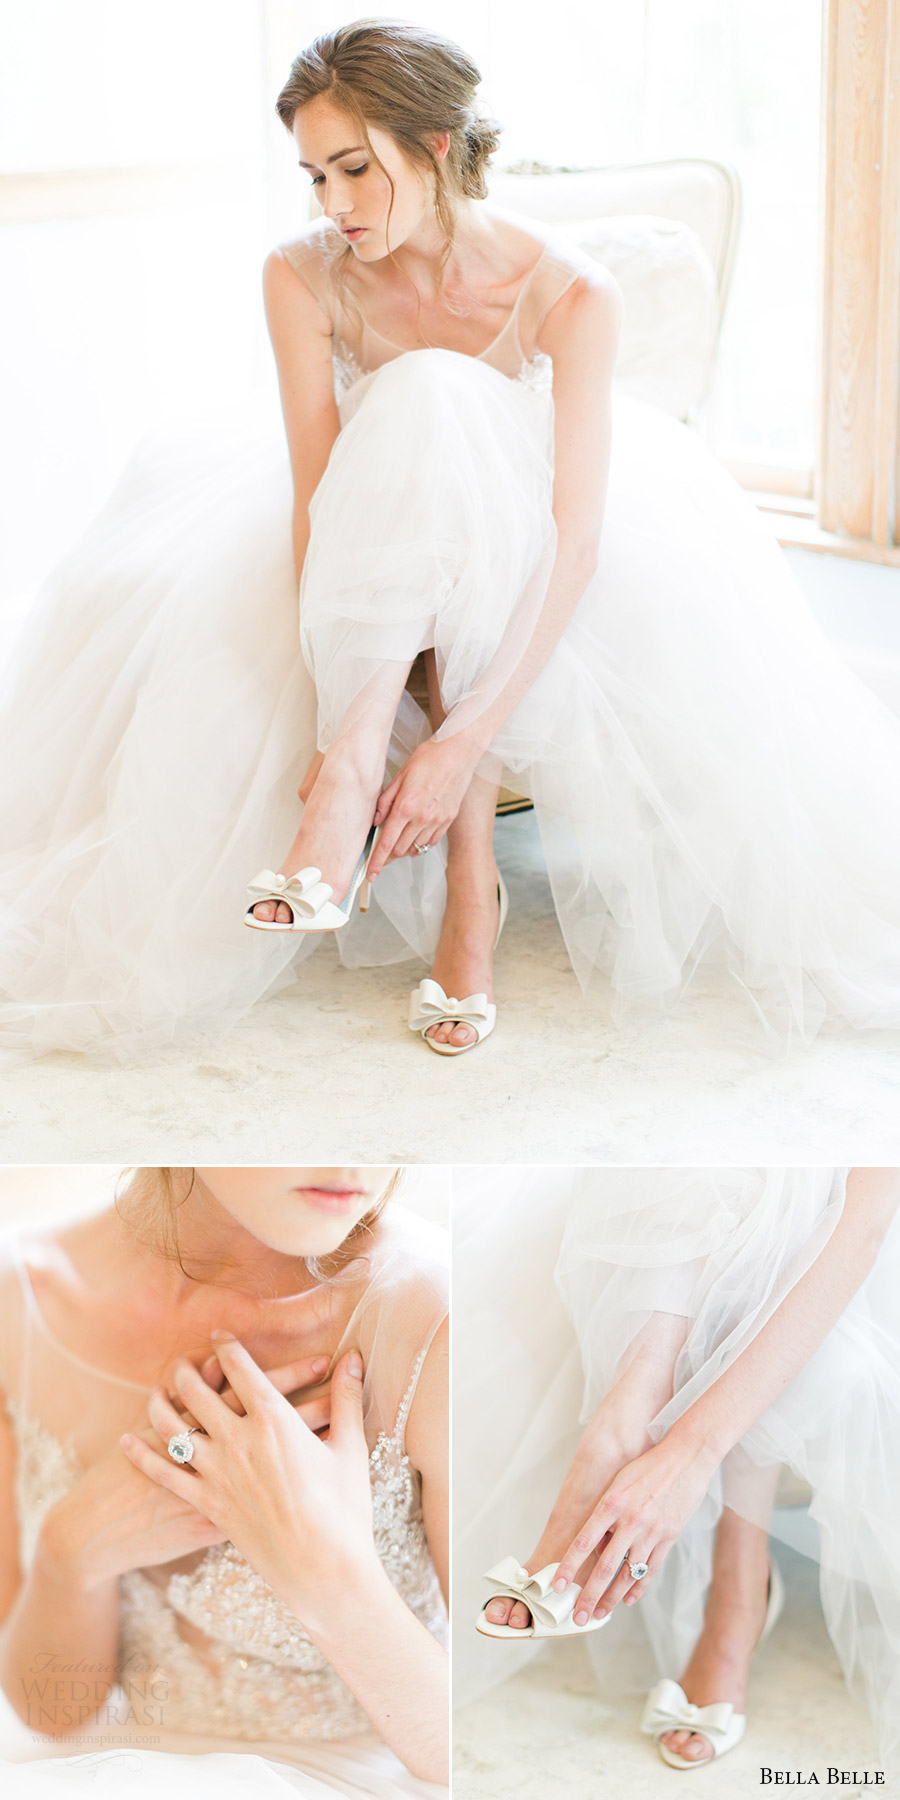 bella belle bridal shoes 2016 julia d orsay peep toe 3.5 inch heels wedding shoes bow rachel may photography